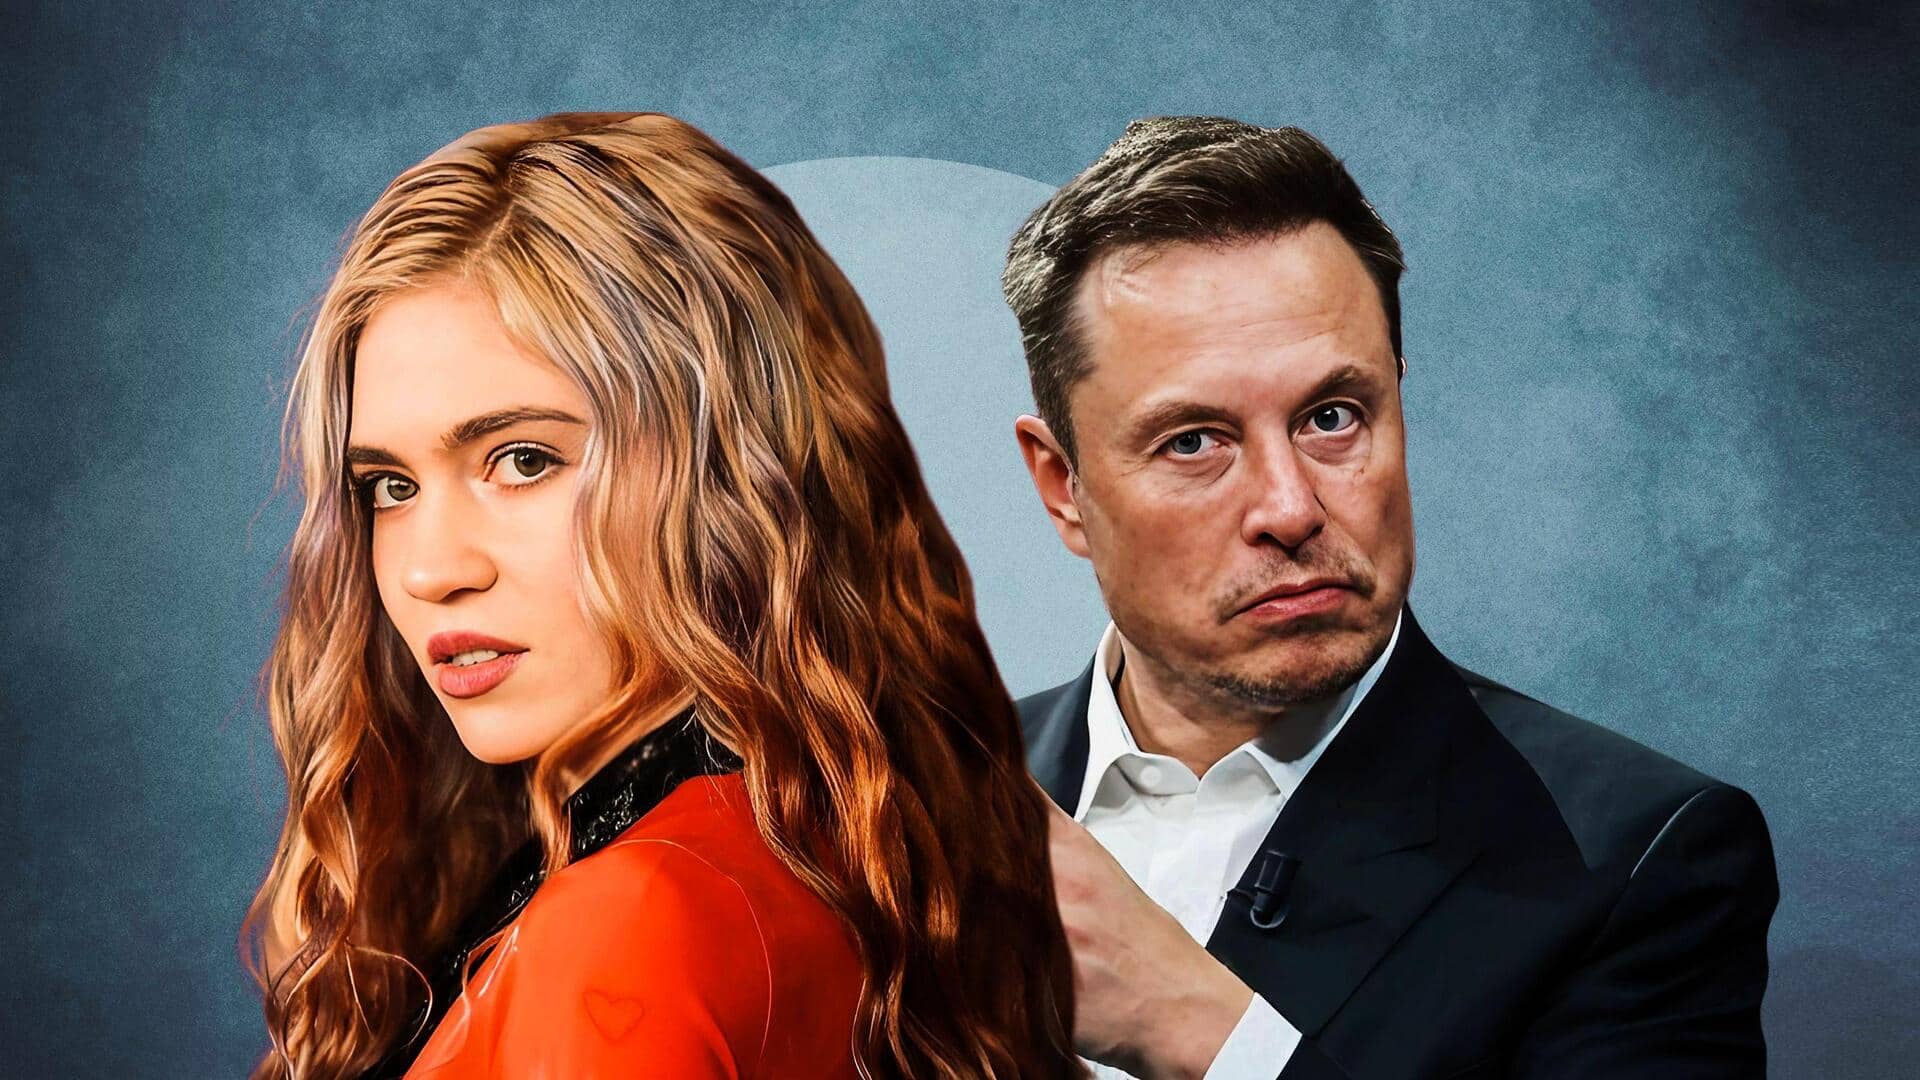 Grimes seeks parental rights; does Elon Musk have custody now